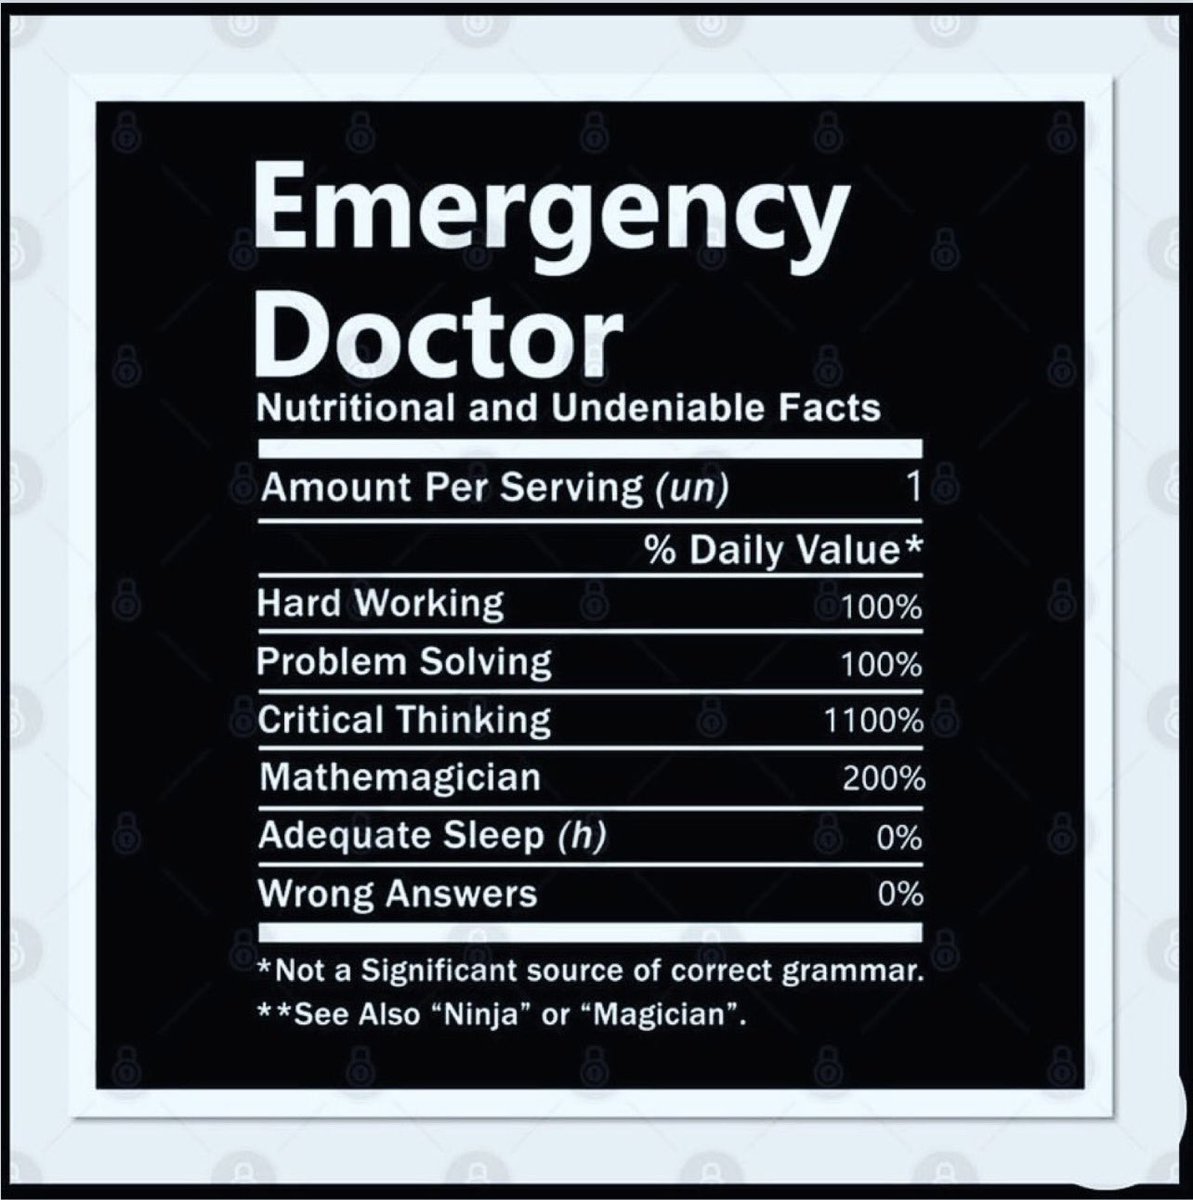 #EmergencyMedicineDay